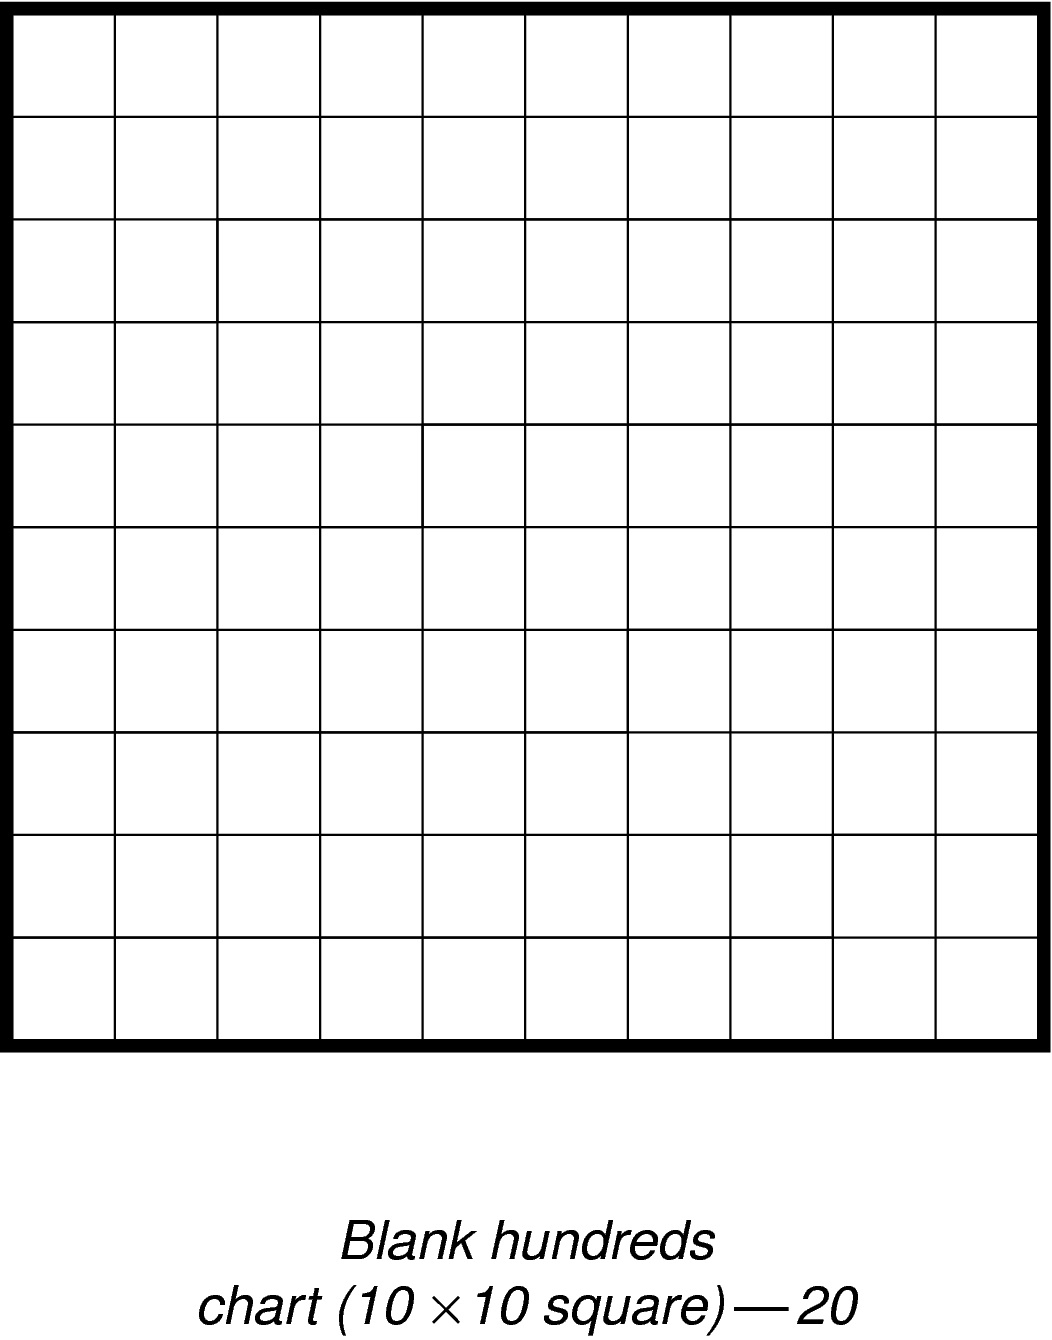 Multiplication Chart Super Teacher | PrintableMultiplication.com